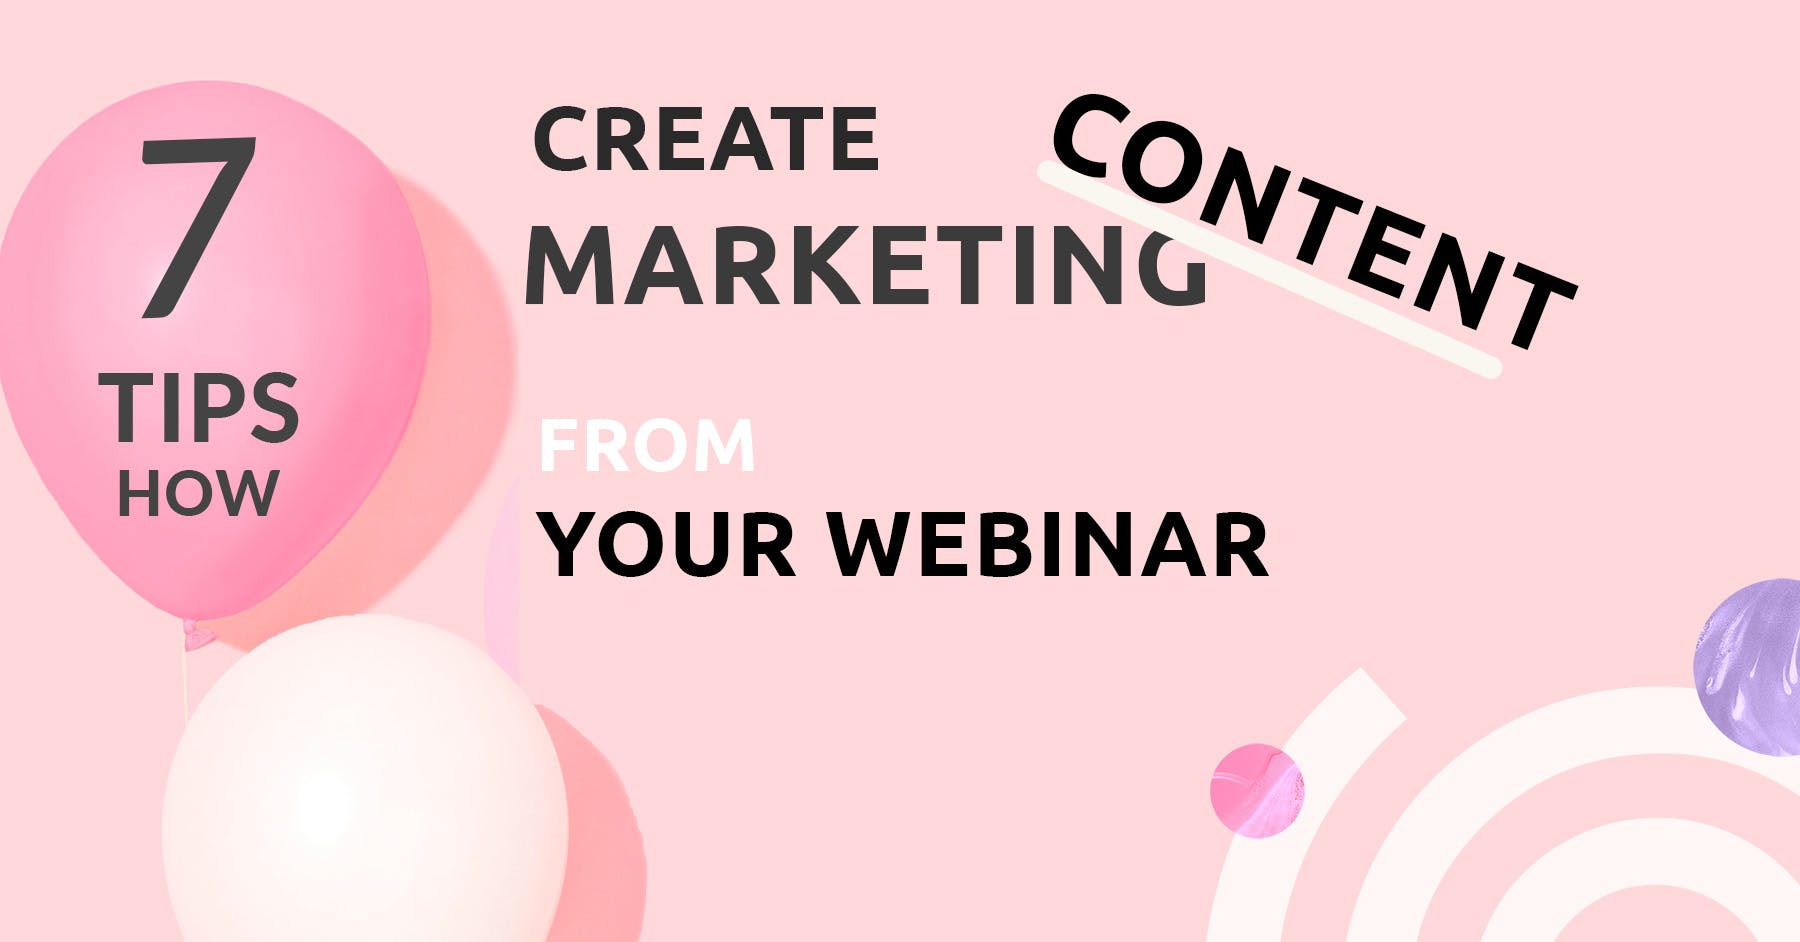 Content marketing tips for webinars - 7 tips how